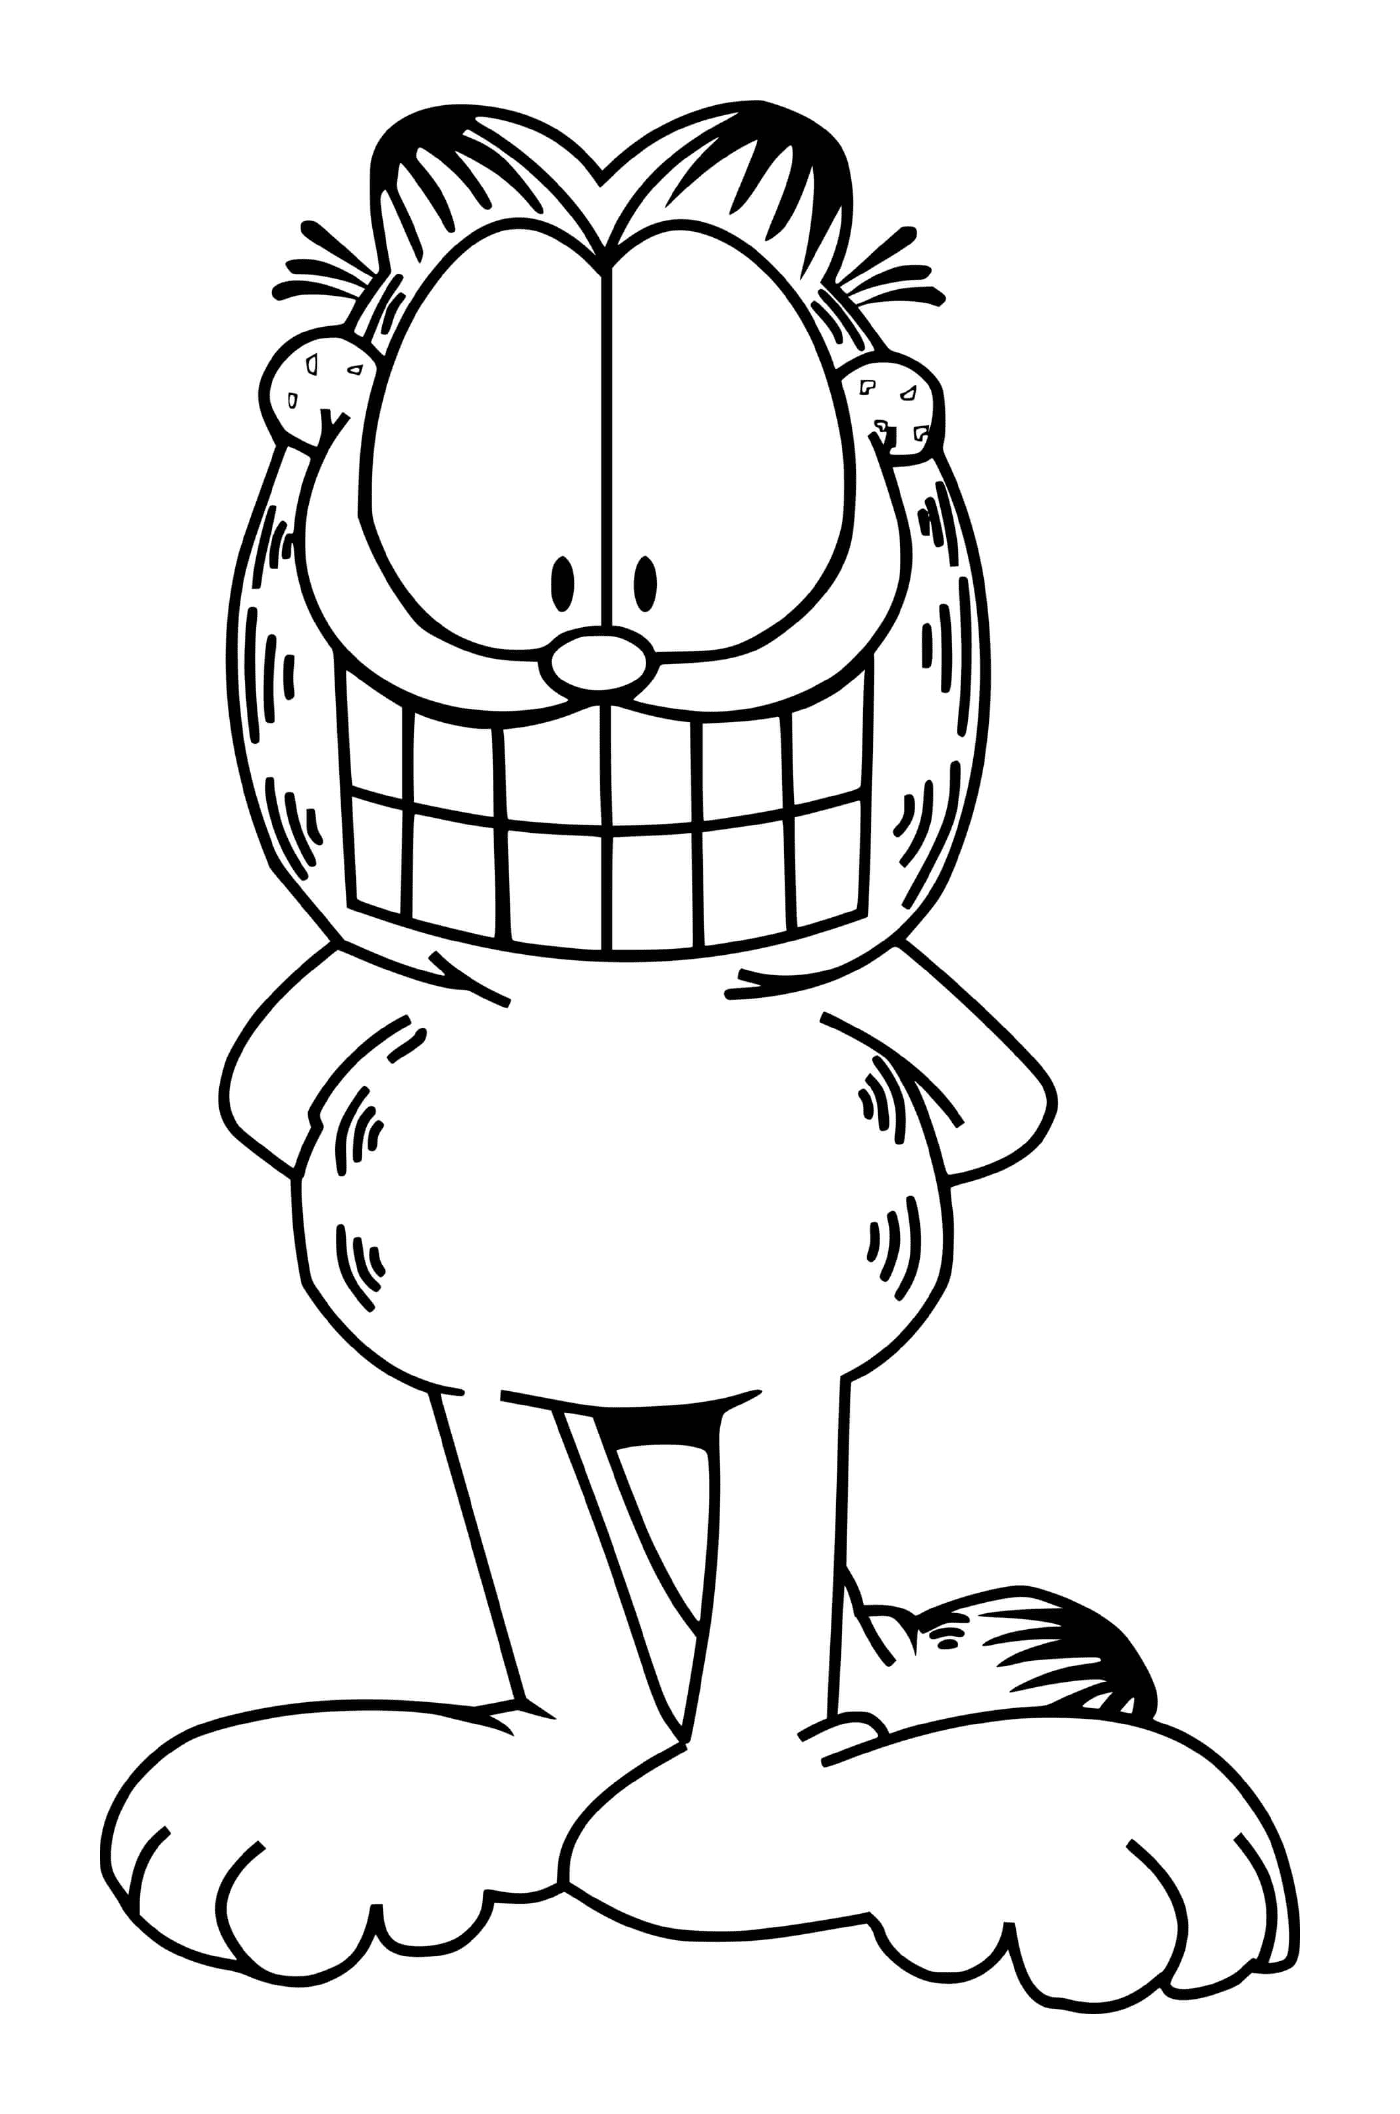  Garfield muestra una gran sonrisa 